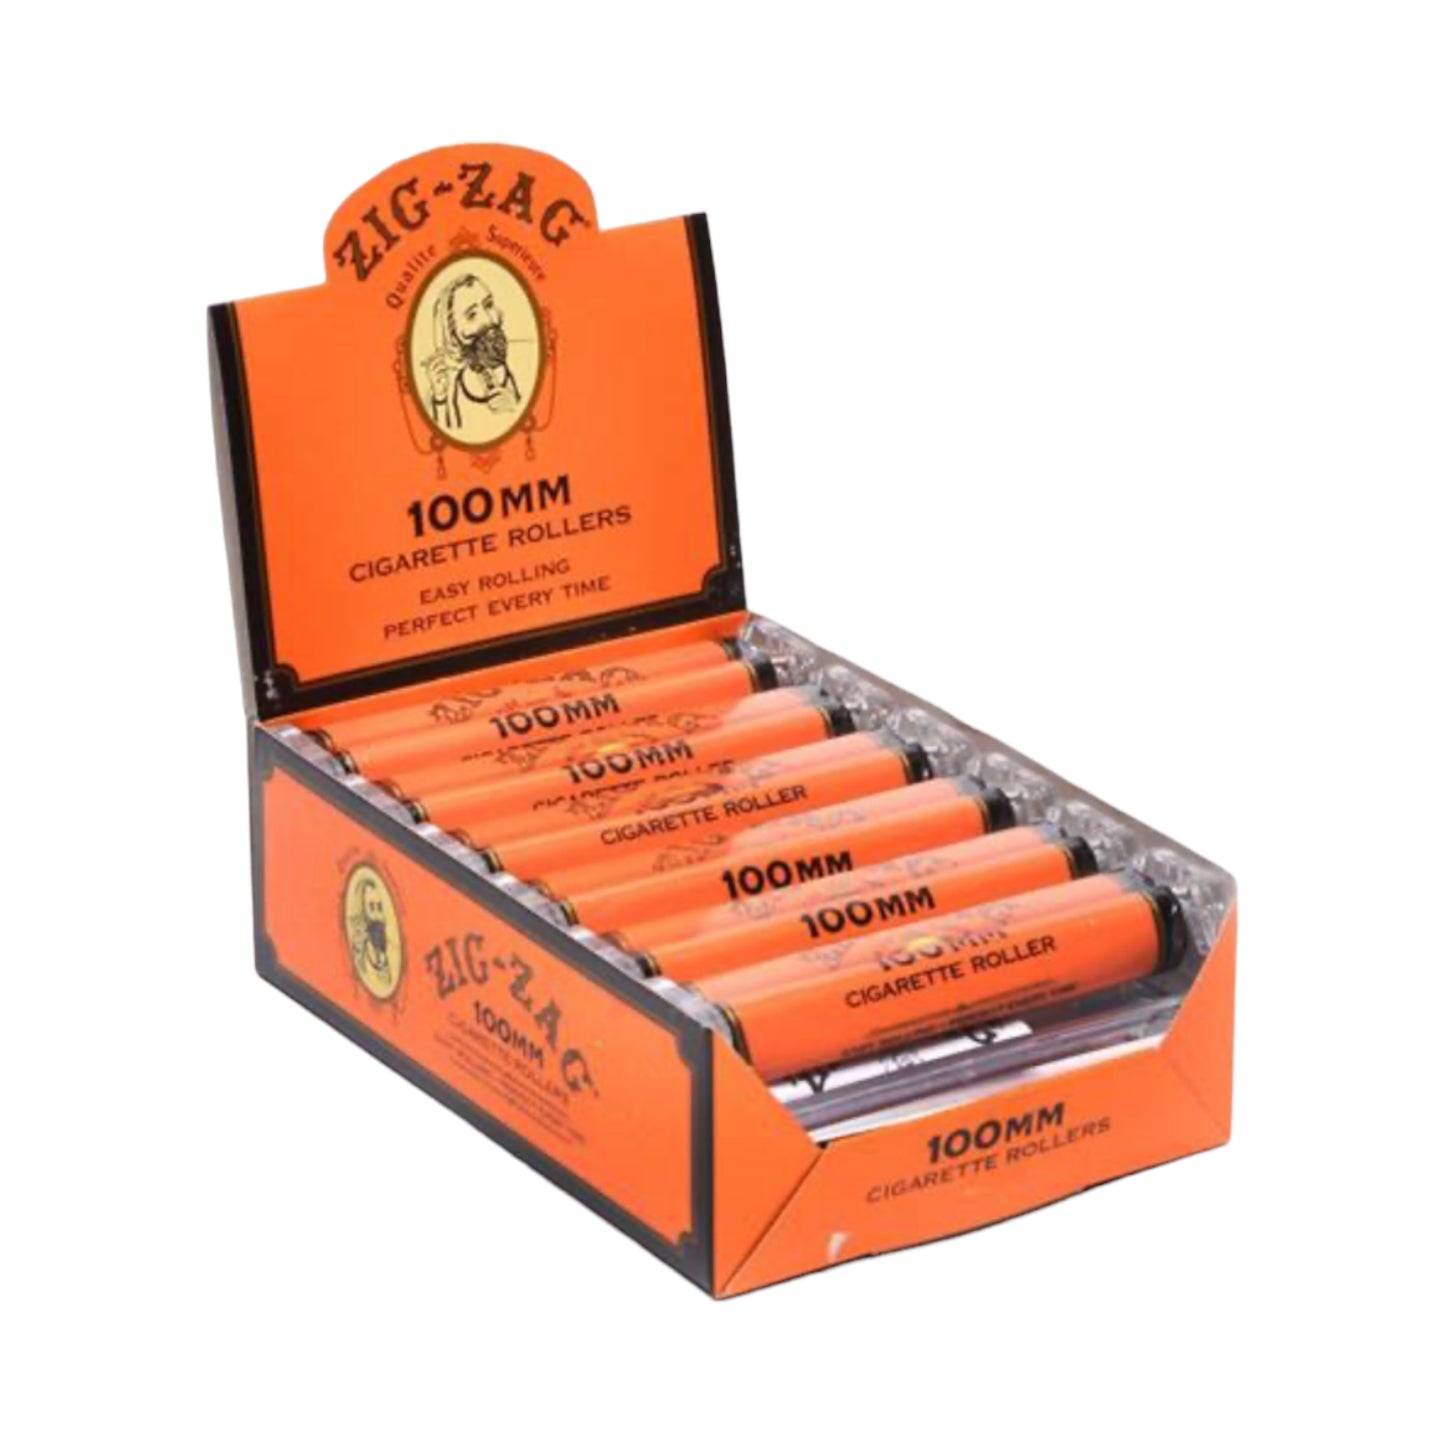 Zig Zag Cigarette Rollers 100MM Orange 12ct